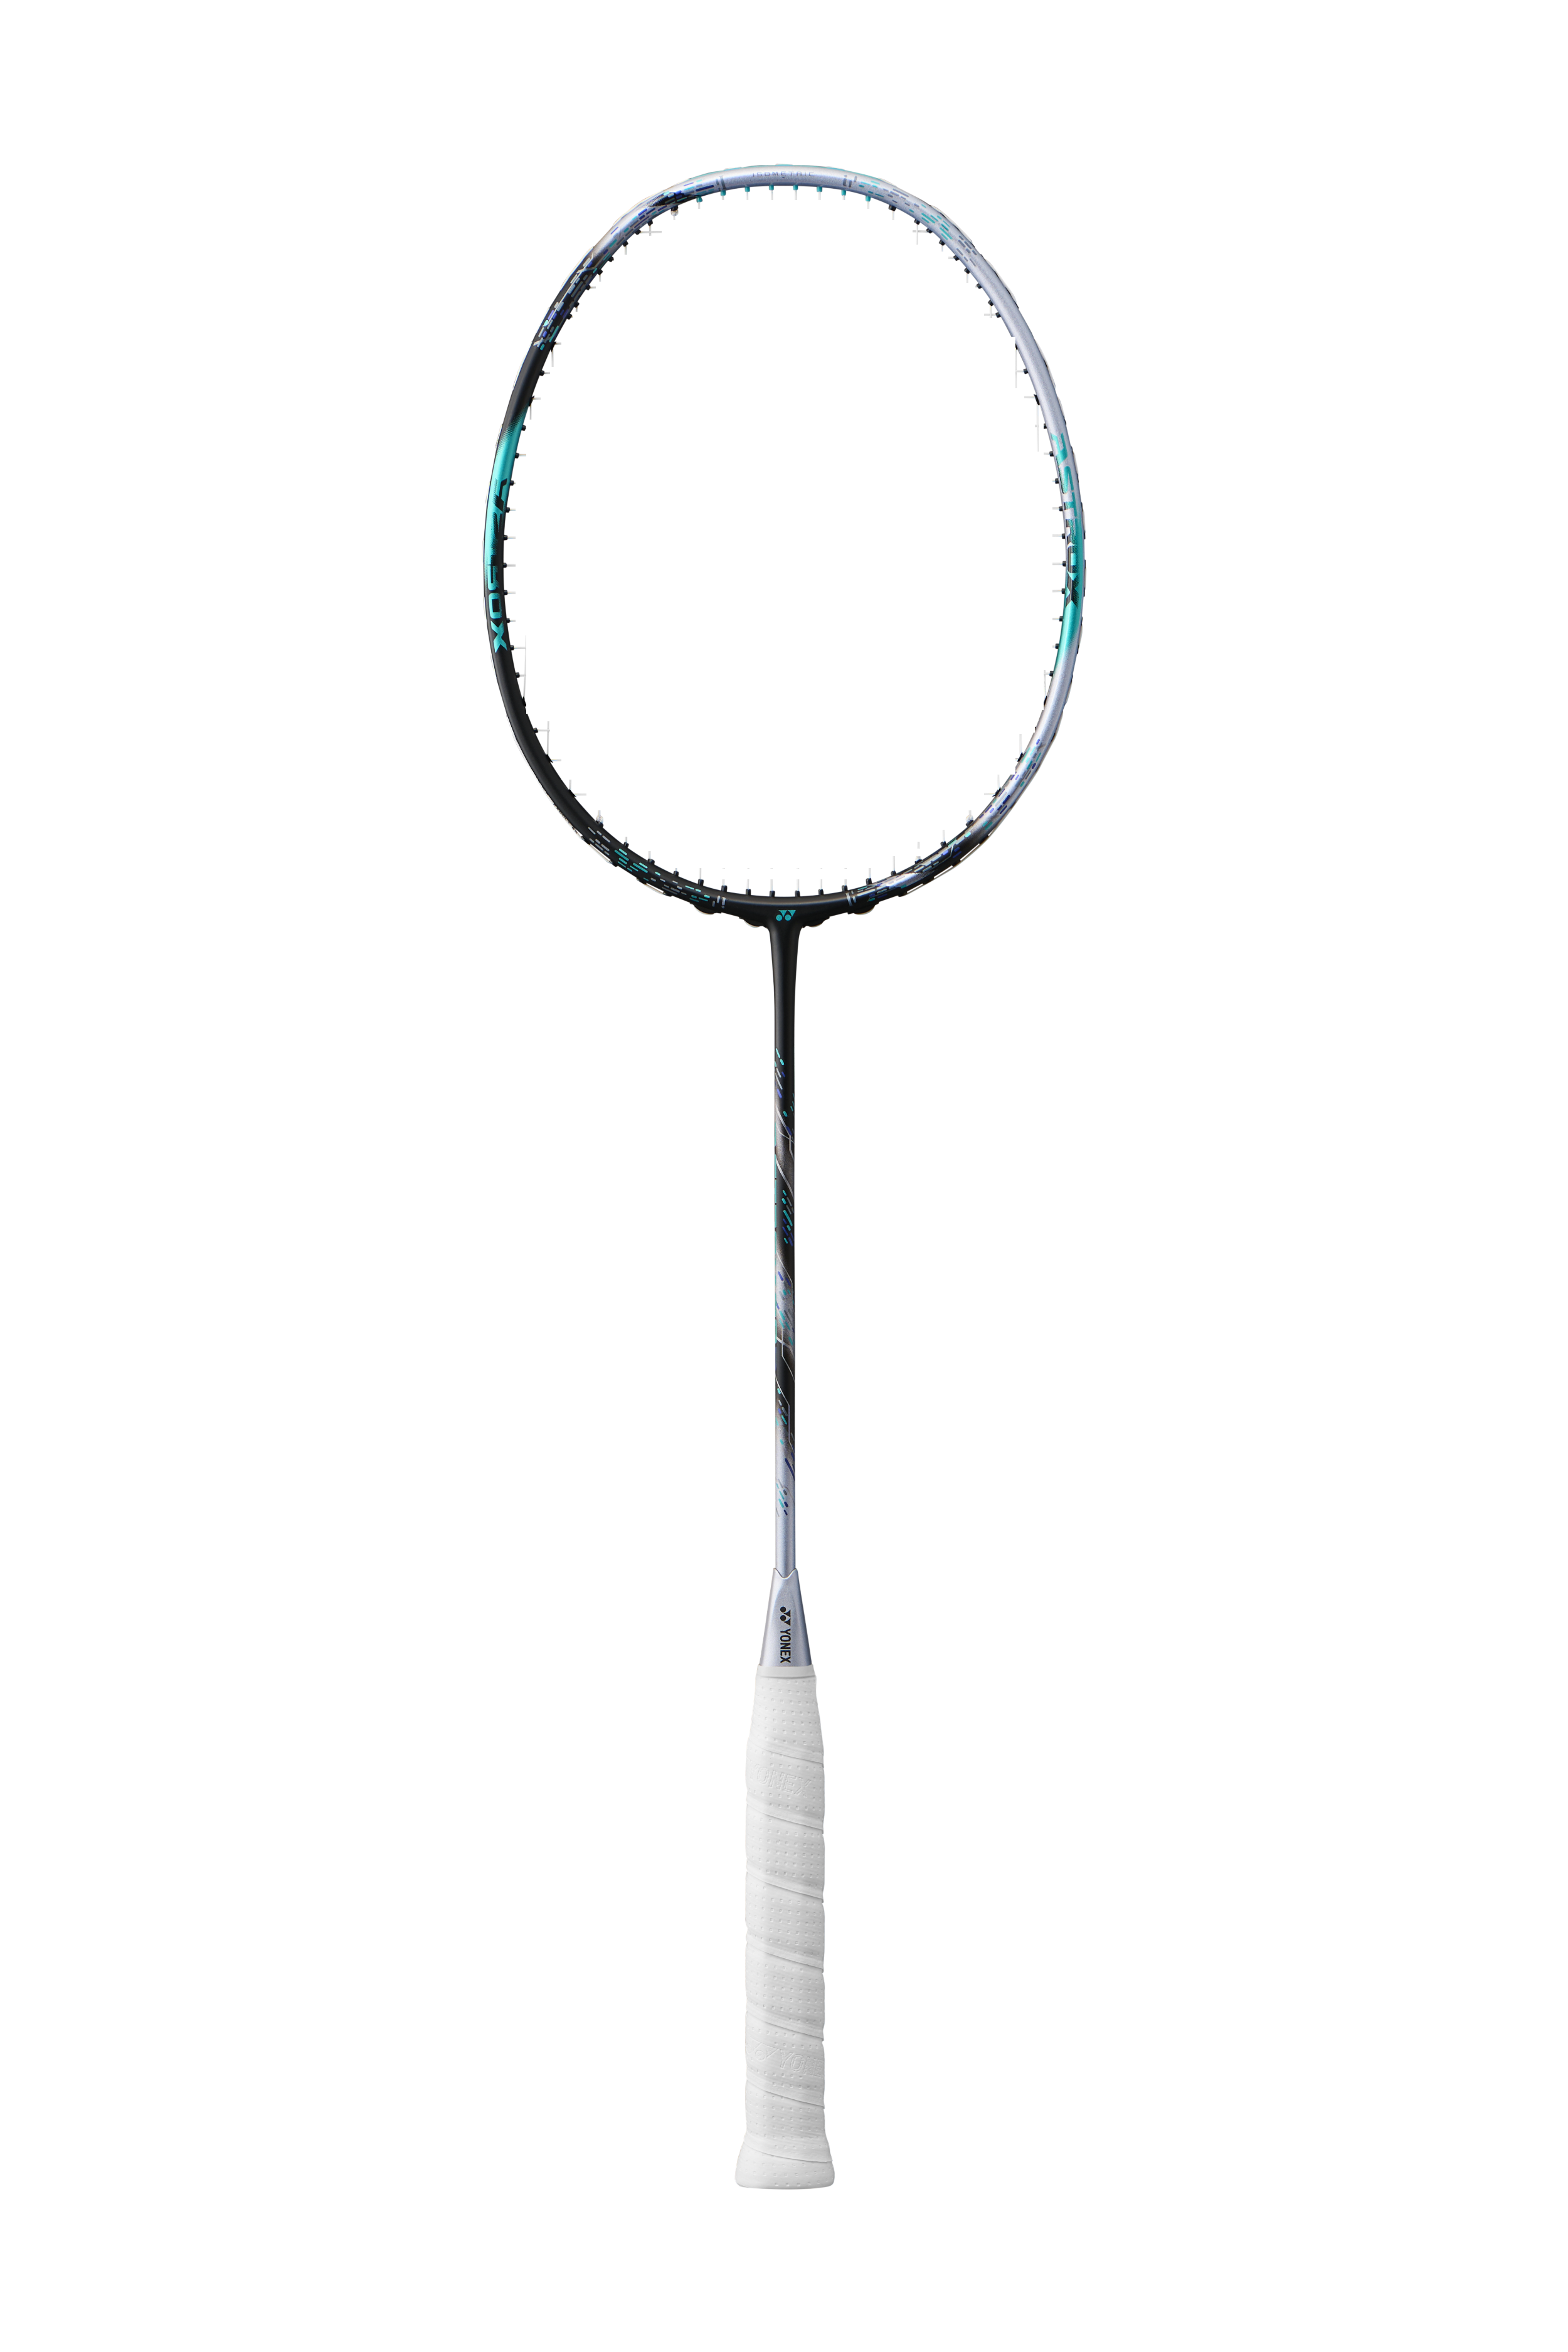 YONEX Badminton Racket - Astrox 88D PRO - 3ax88d-p - Black/Silver - Frame only